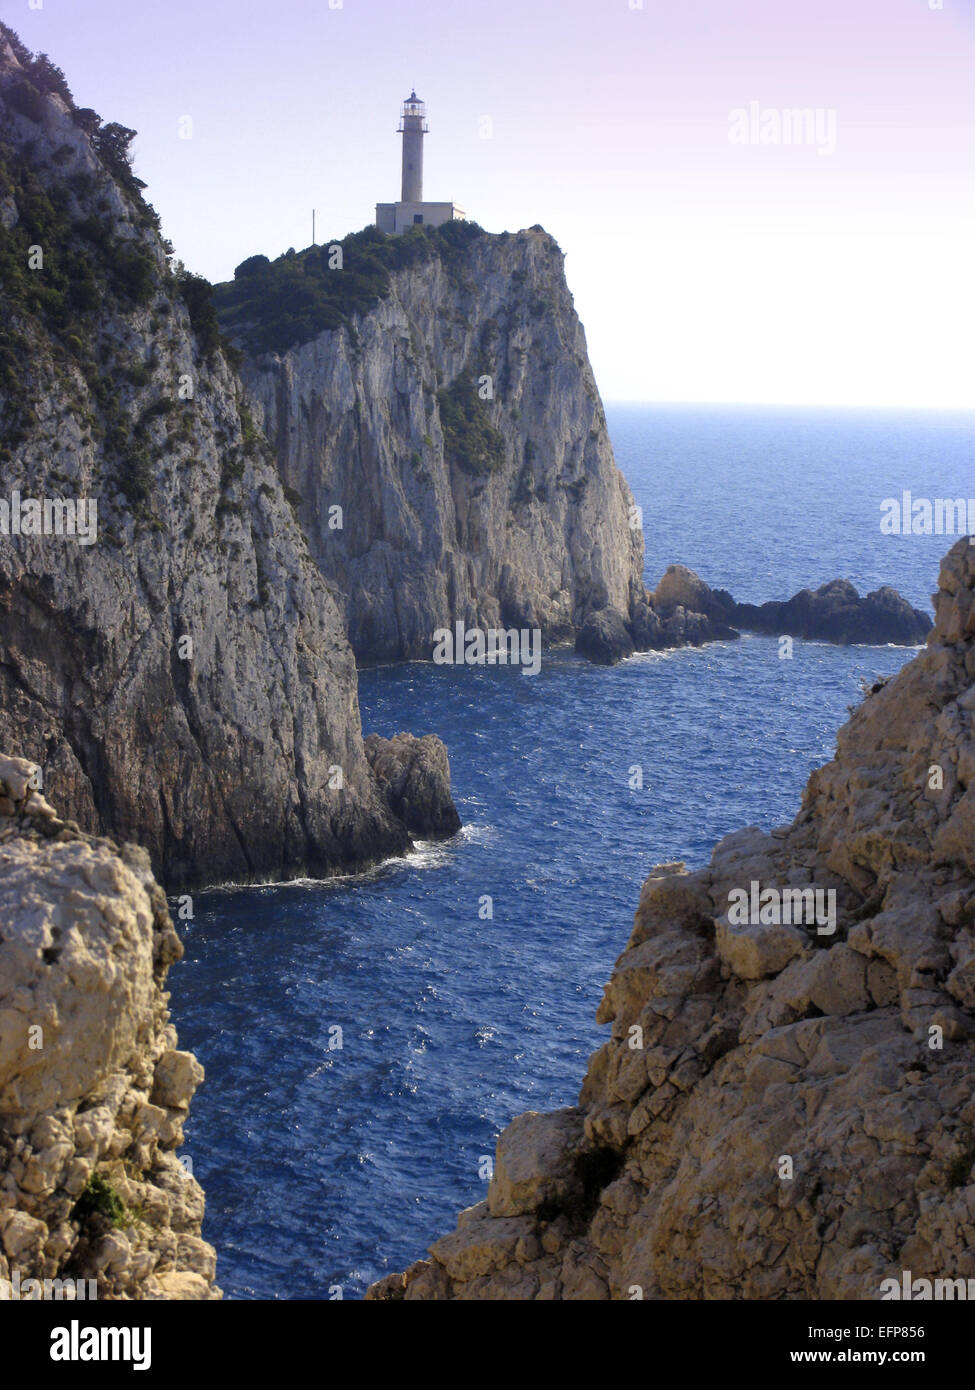 Griechenland Insel Lefkada Felskueste Steilkueste Leuchtturm Europa Kleine Griechische Inseln Ionische Lefkas Kueste Felsen Meer Stock Photo